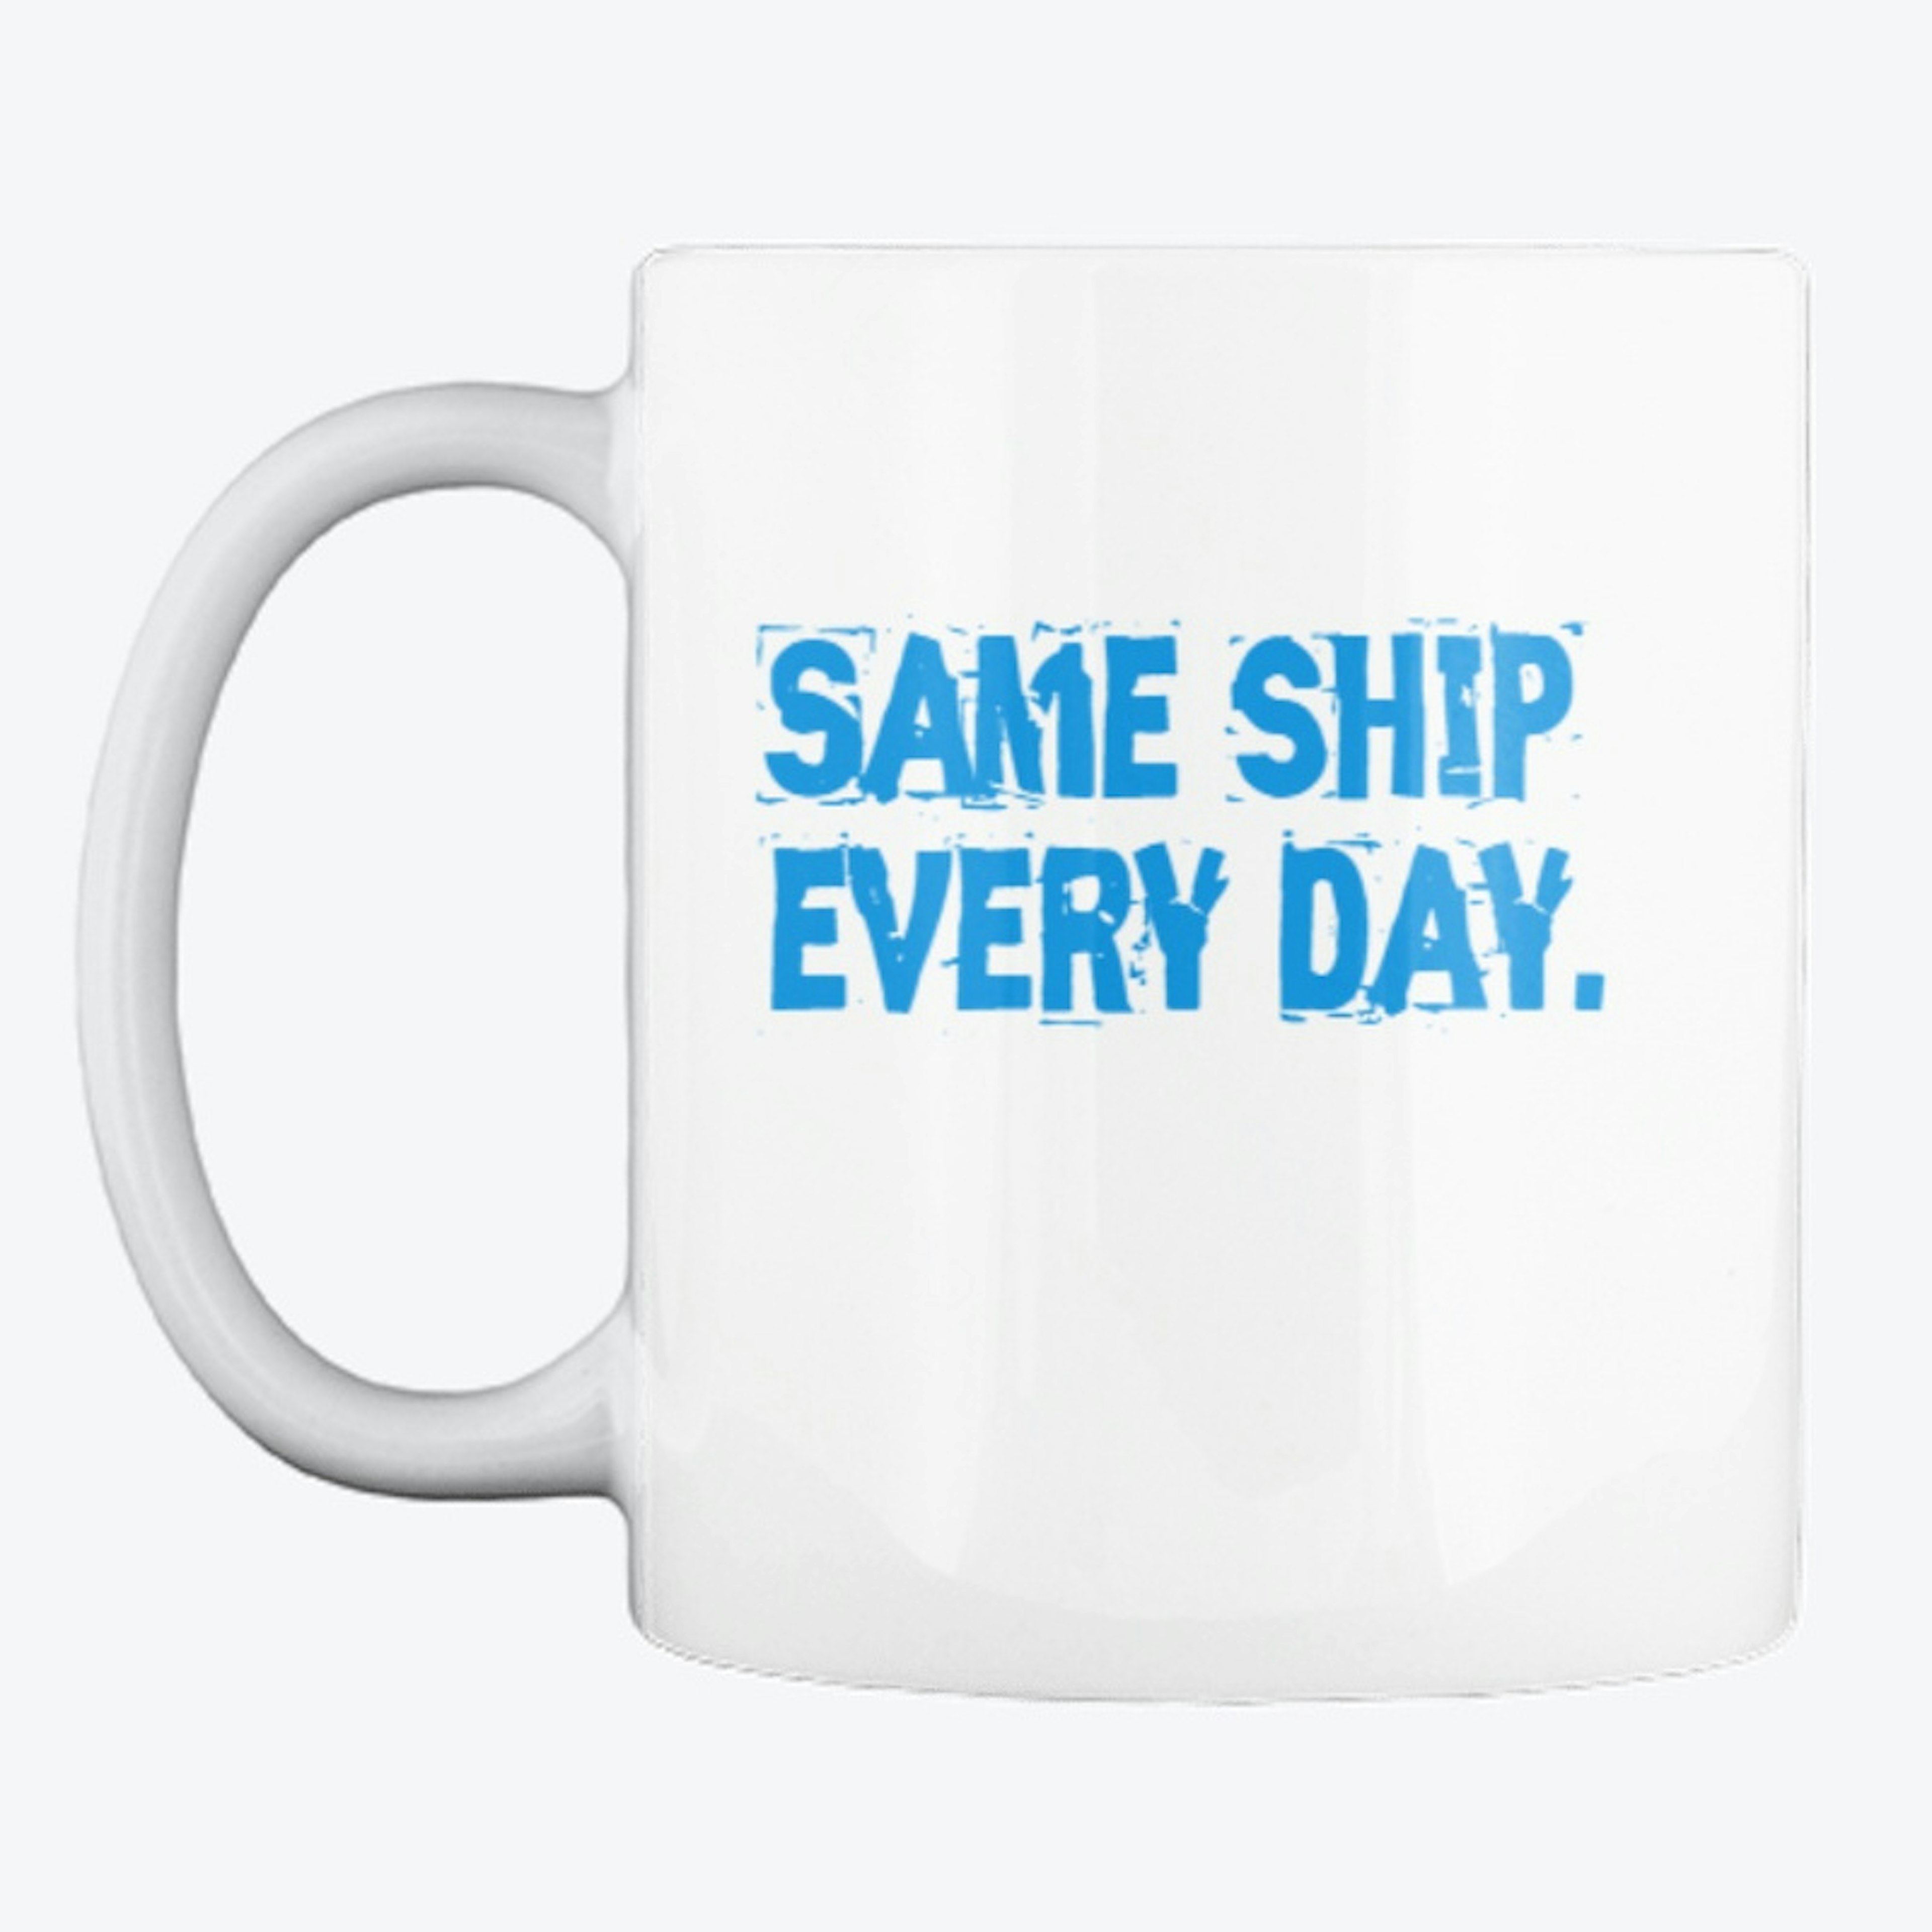 Same Ship